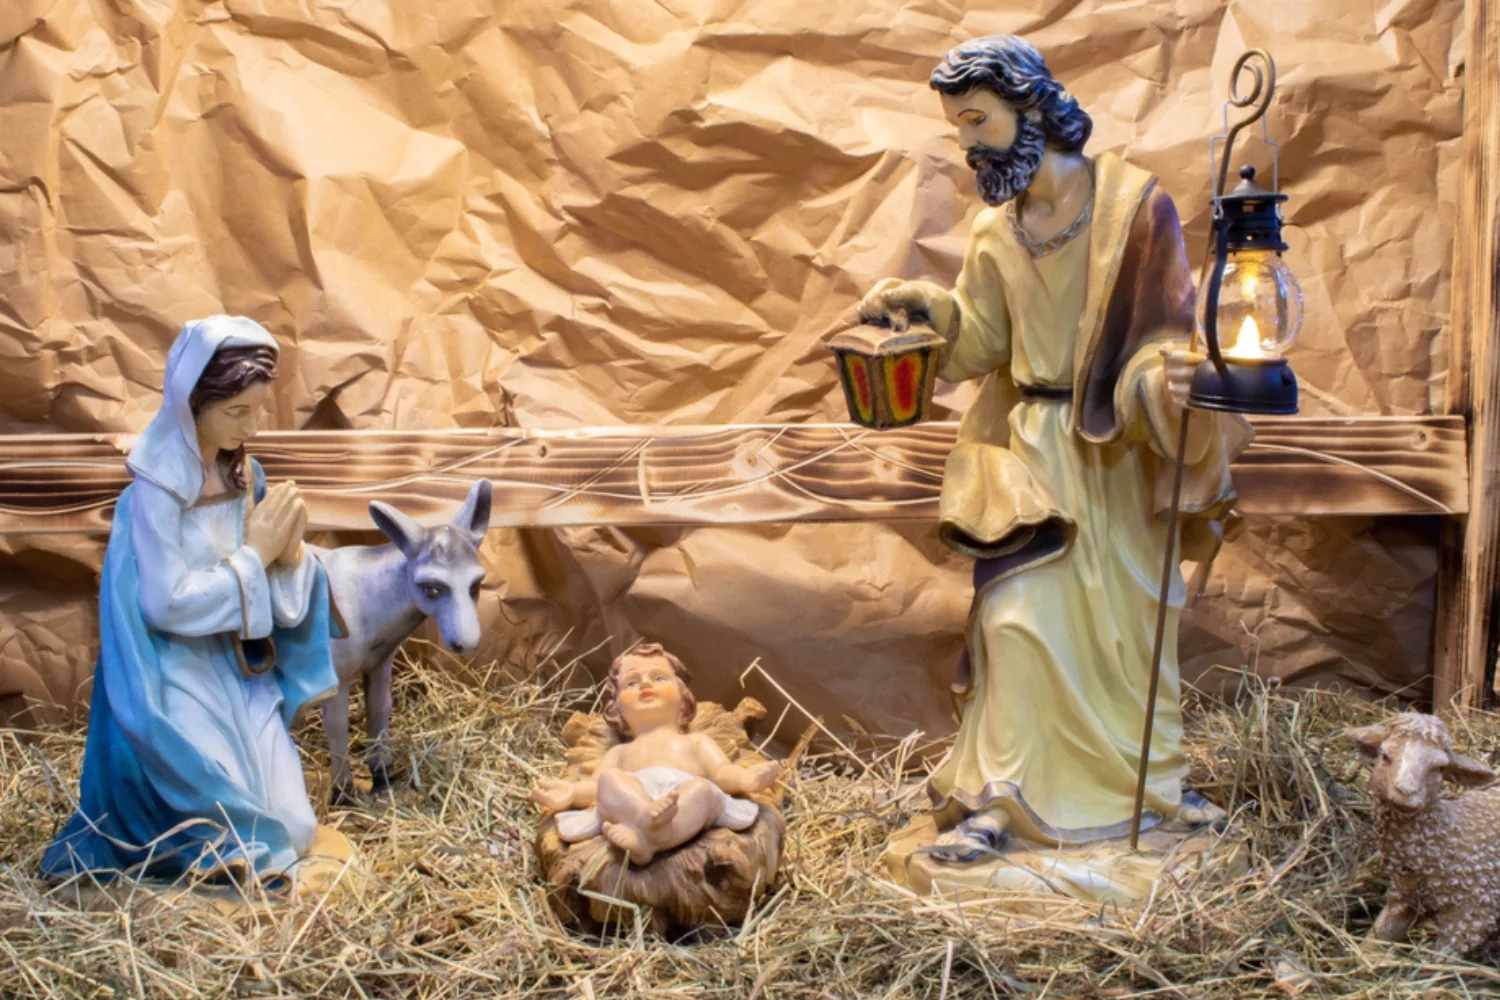 The Cardboard Christmas! – Kids Enjoying Jesus